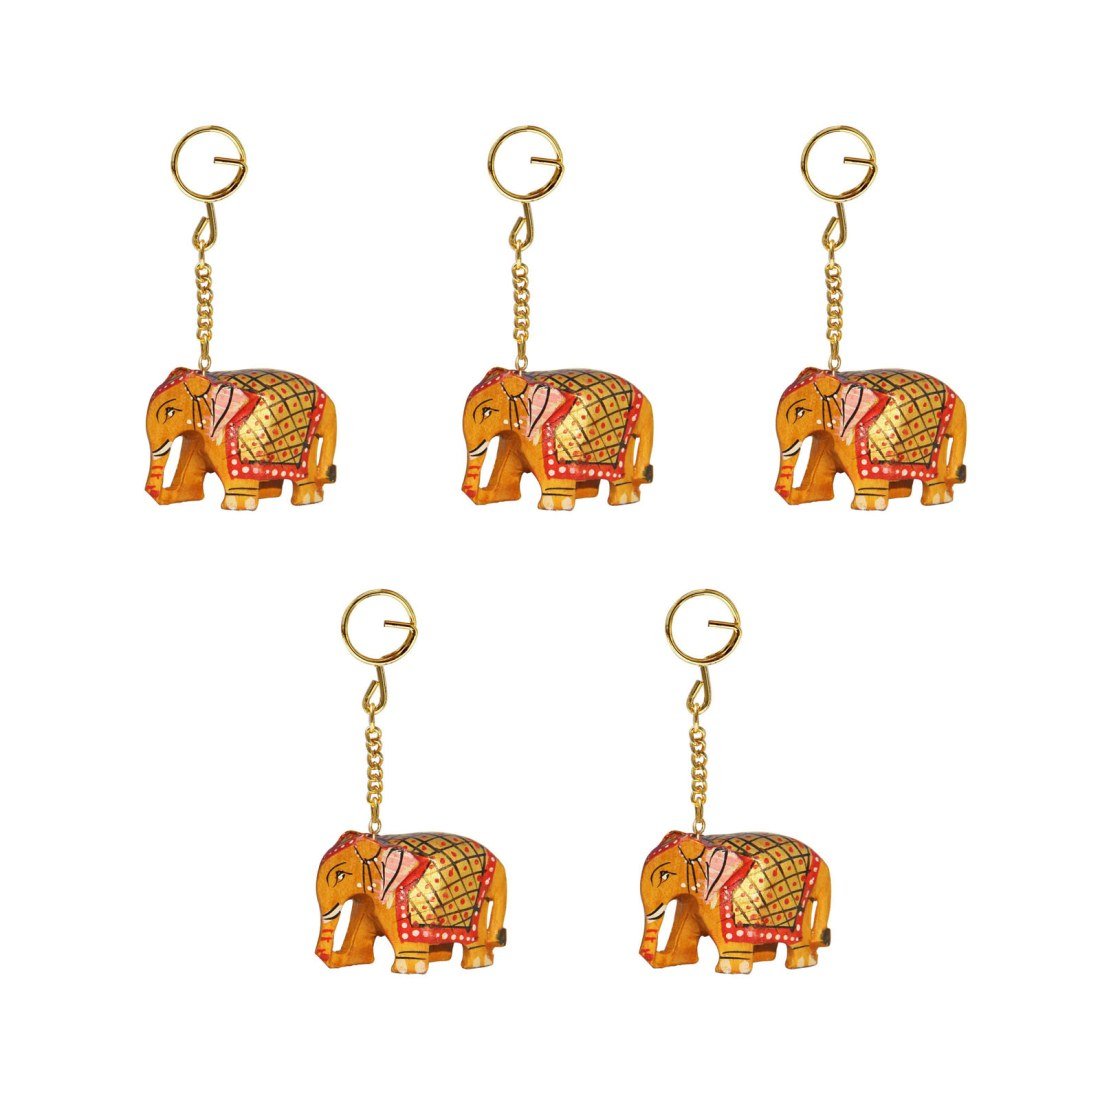 Beautifully Designed Wooden Elephant & Peacock Key Chain set